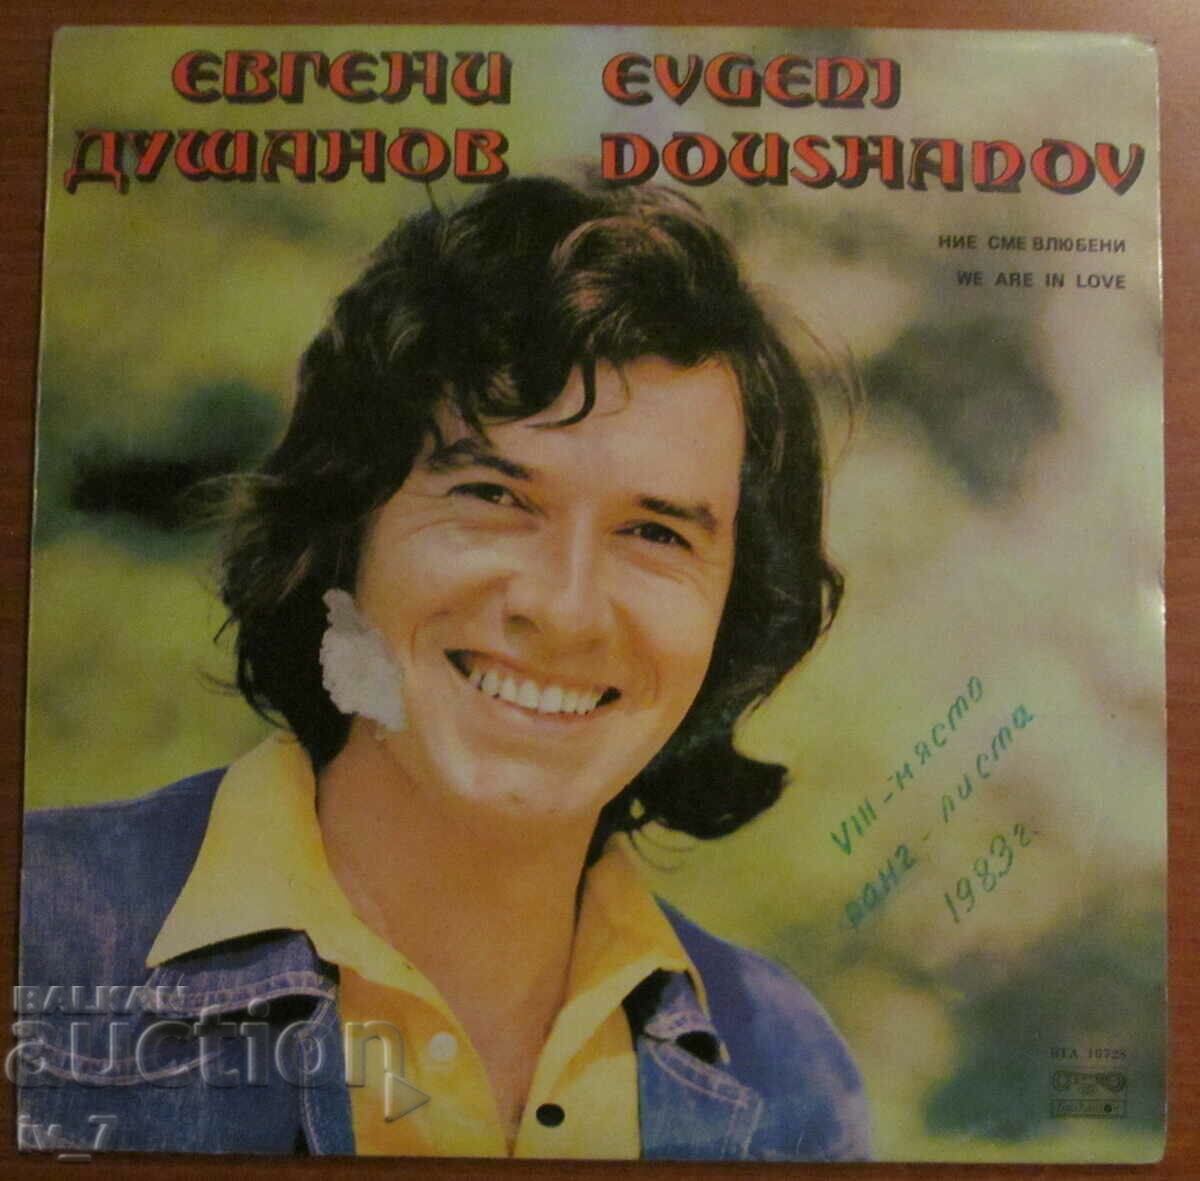 RECORD - EVGENI DUSHANOV, large format